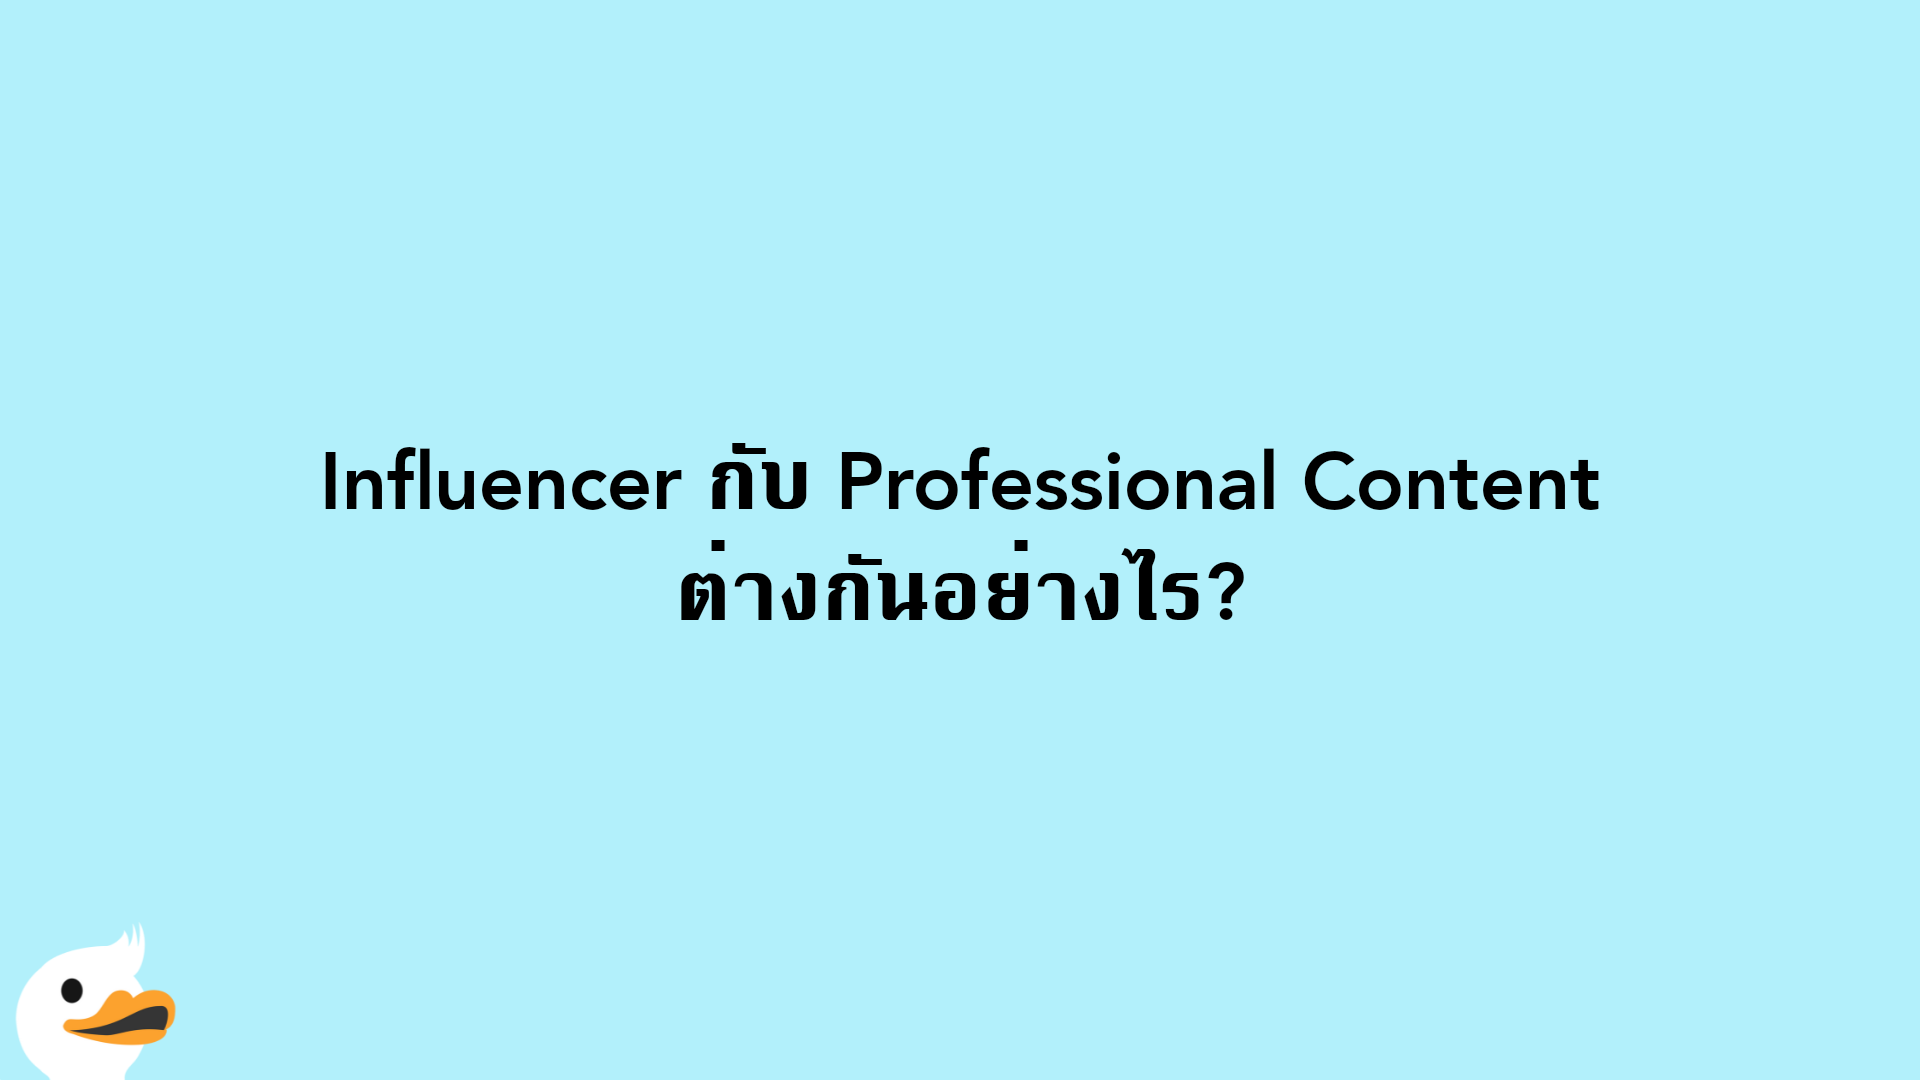 Influencer กับ Professional Content ต่างกันอย่างไร?